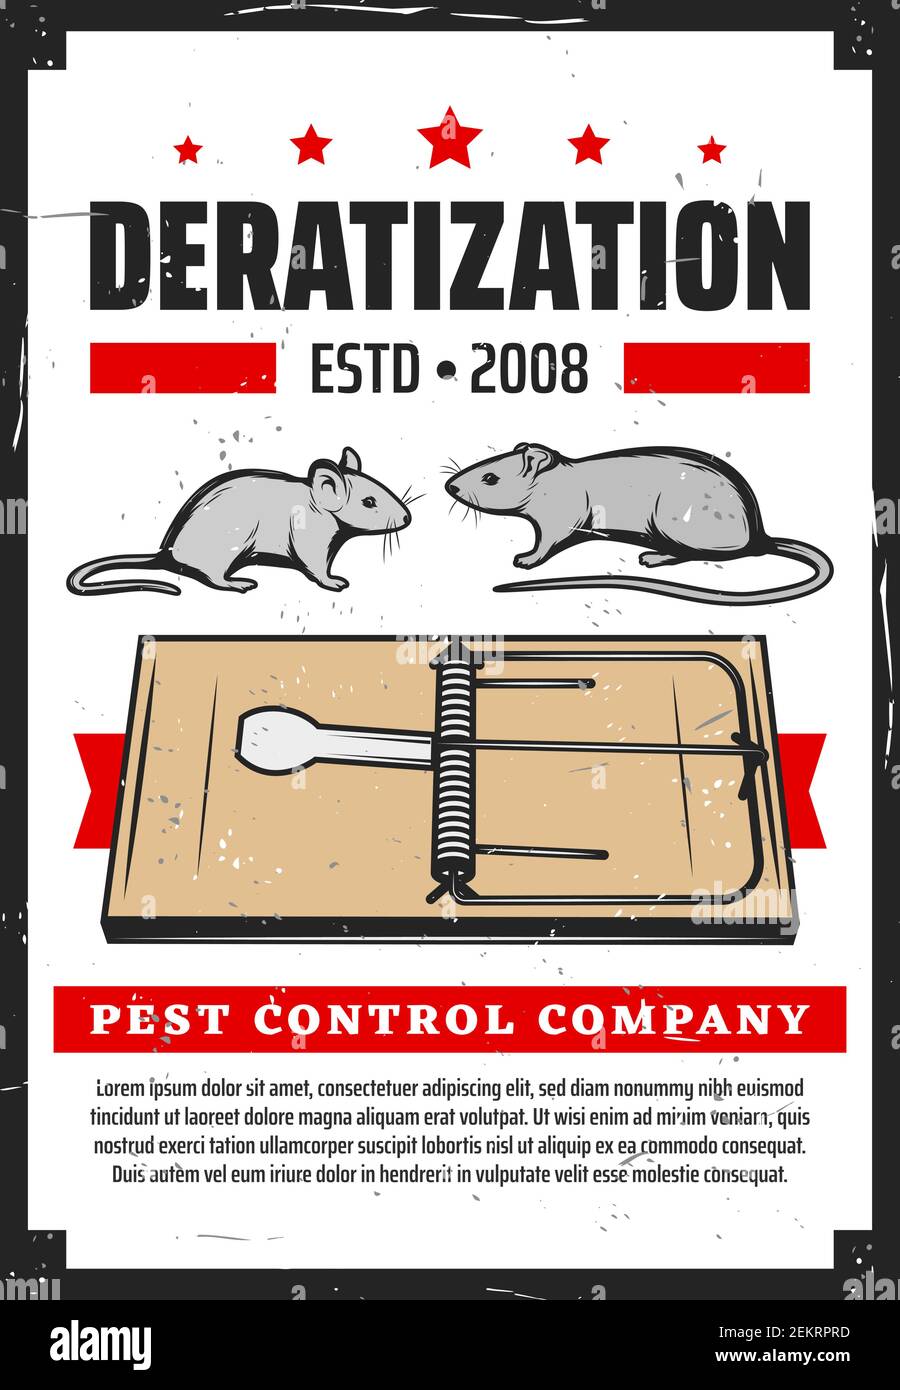 Servicio de control de plagas, deratización y exterminio de roedores. Vector ratas domésticas de oficina exterminio, mousetraps e higiene limpia Imagen Vector de stock - Alamy